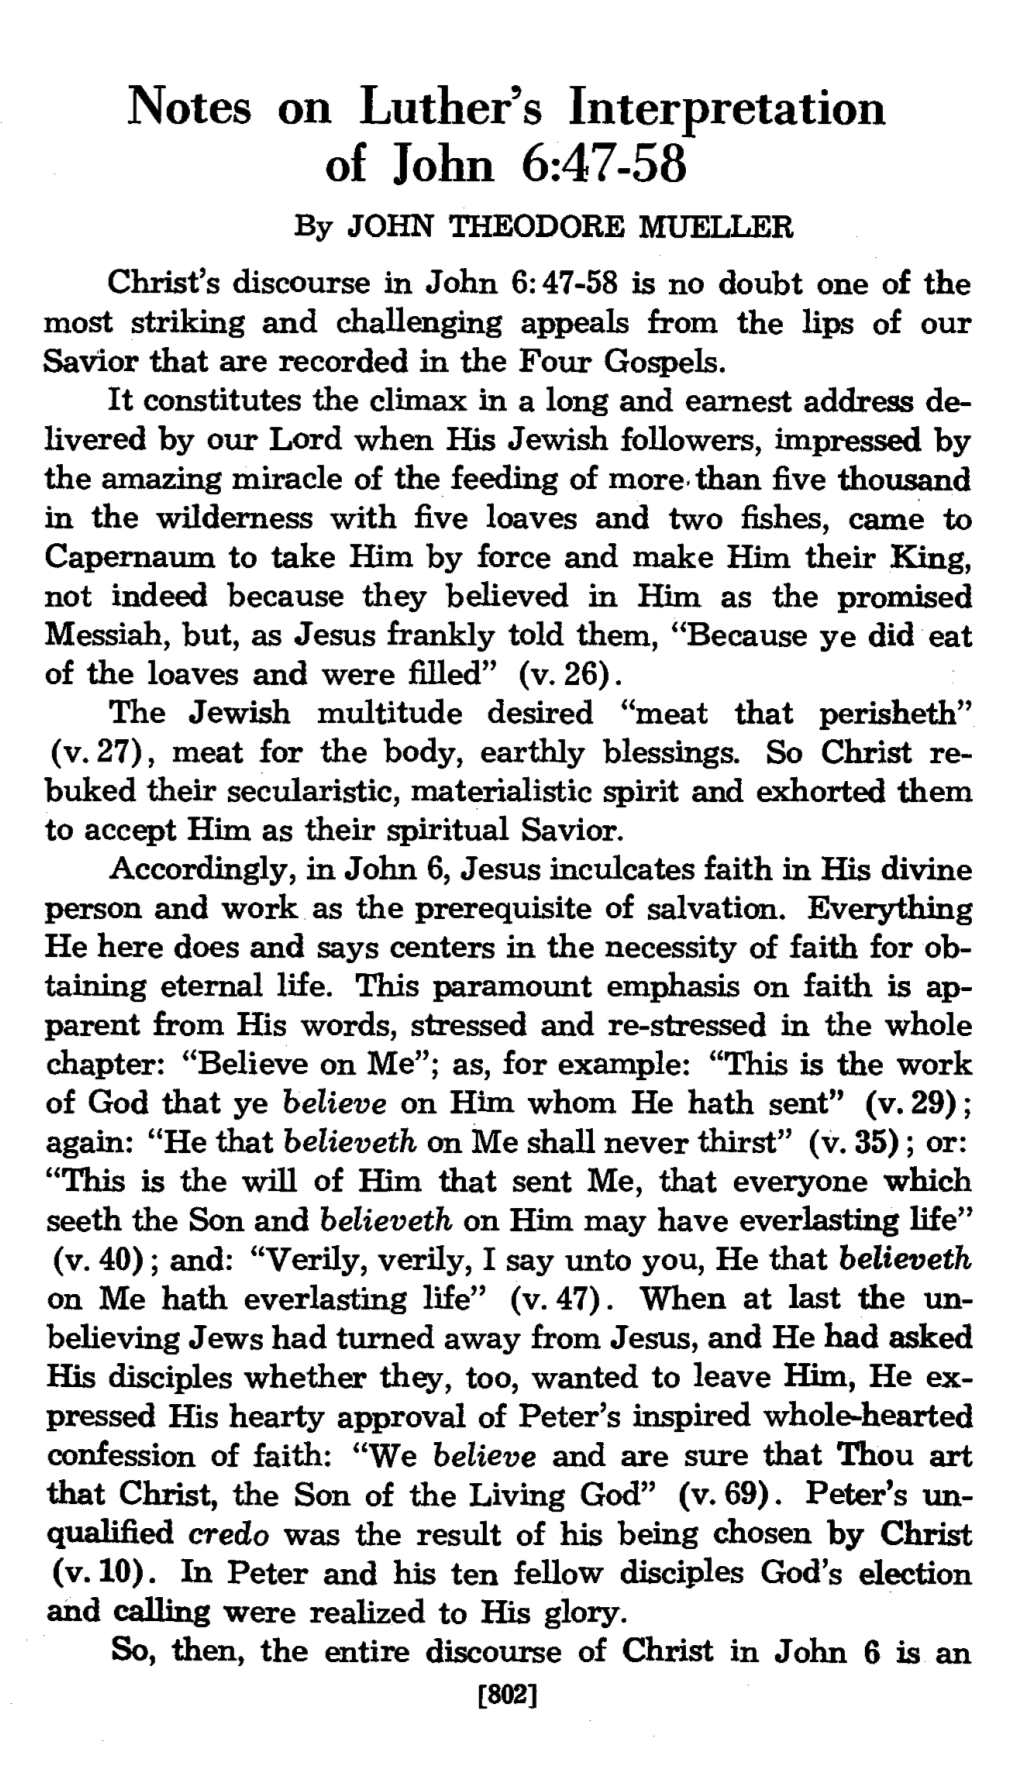 Notes on Luther's Interpretation of John 6:47-58